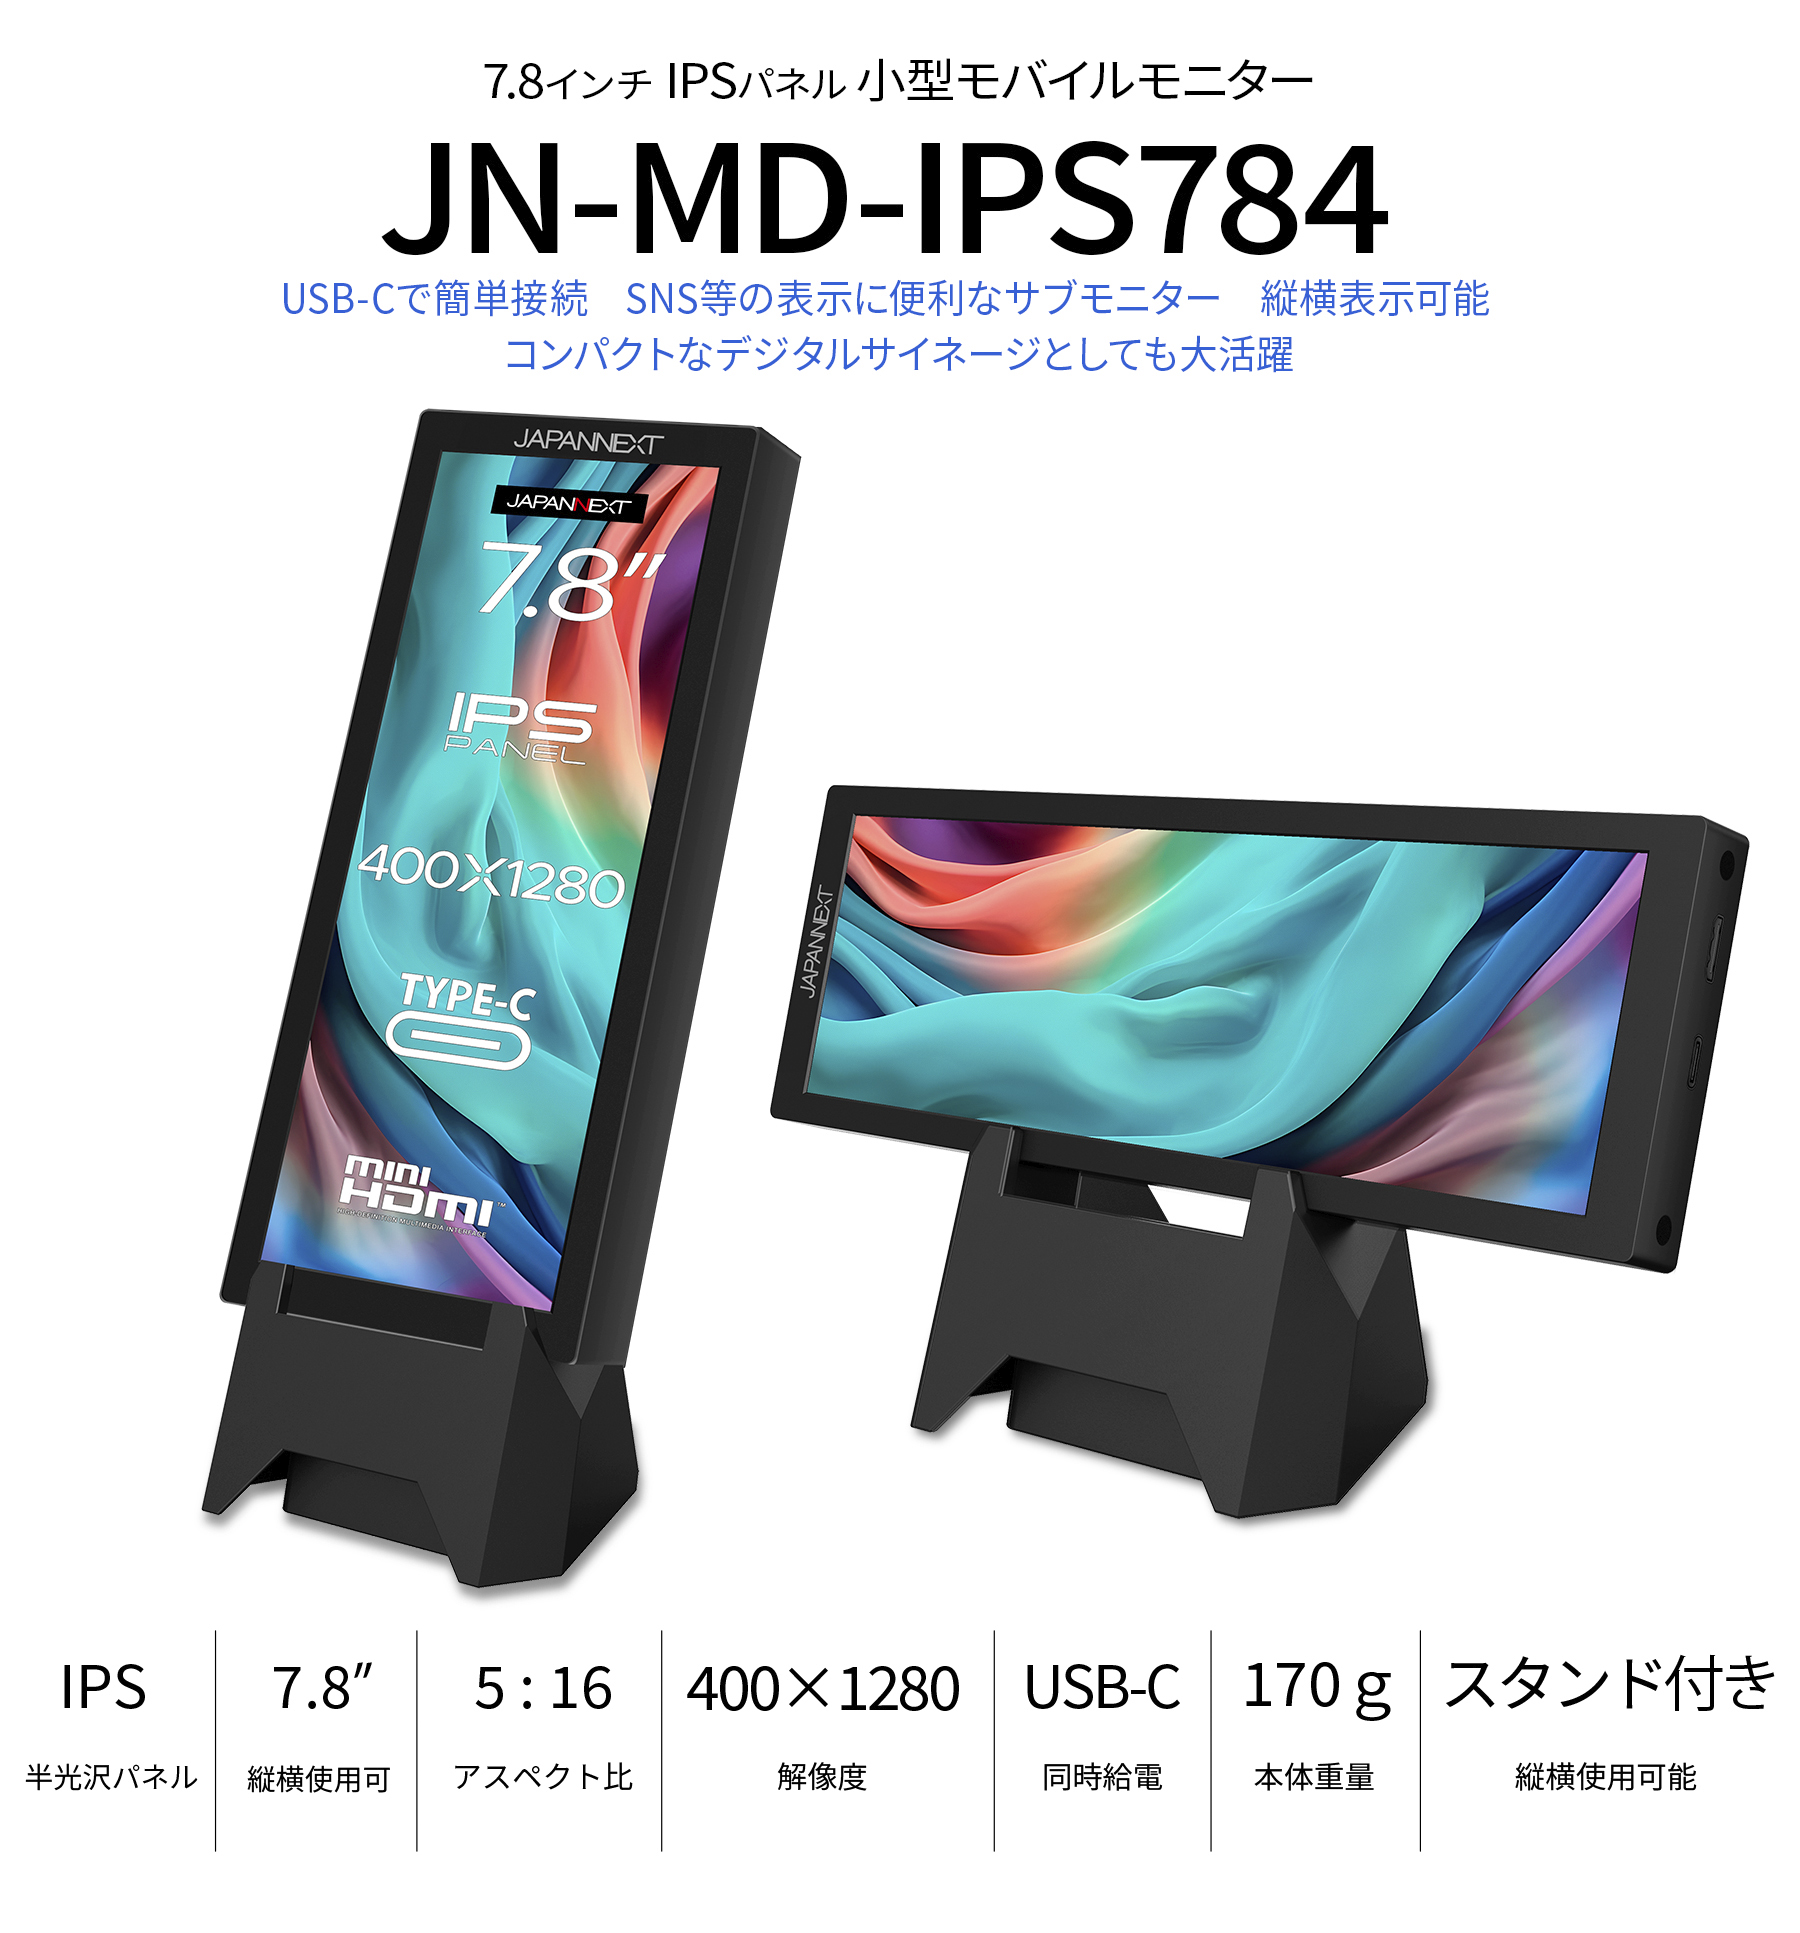 JAPANNEXT 7.8インチIPSパネル 400x1280解像度 小型縦型モバイル 